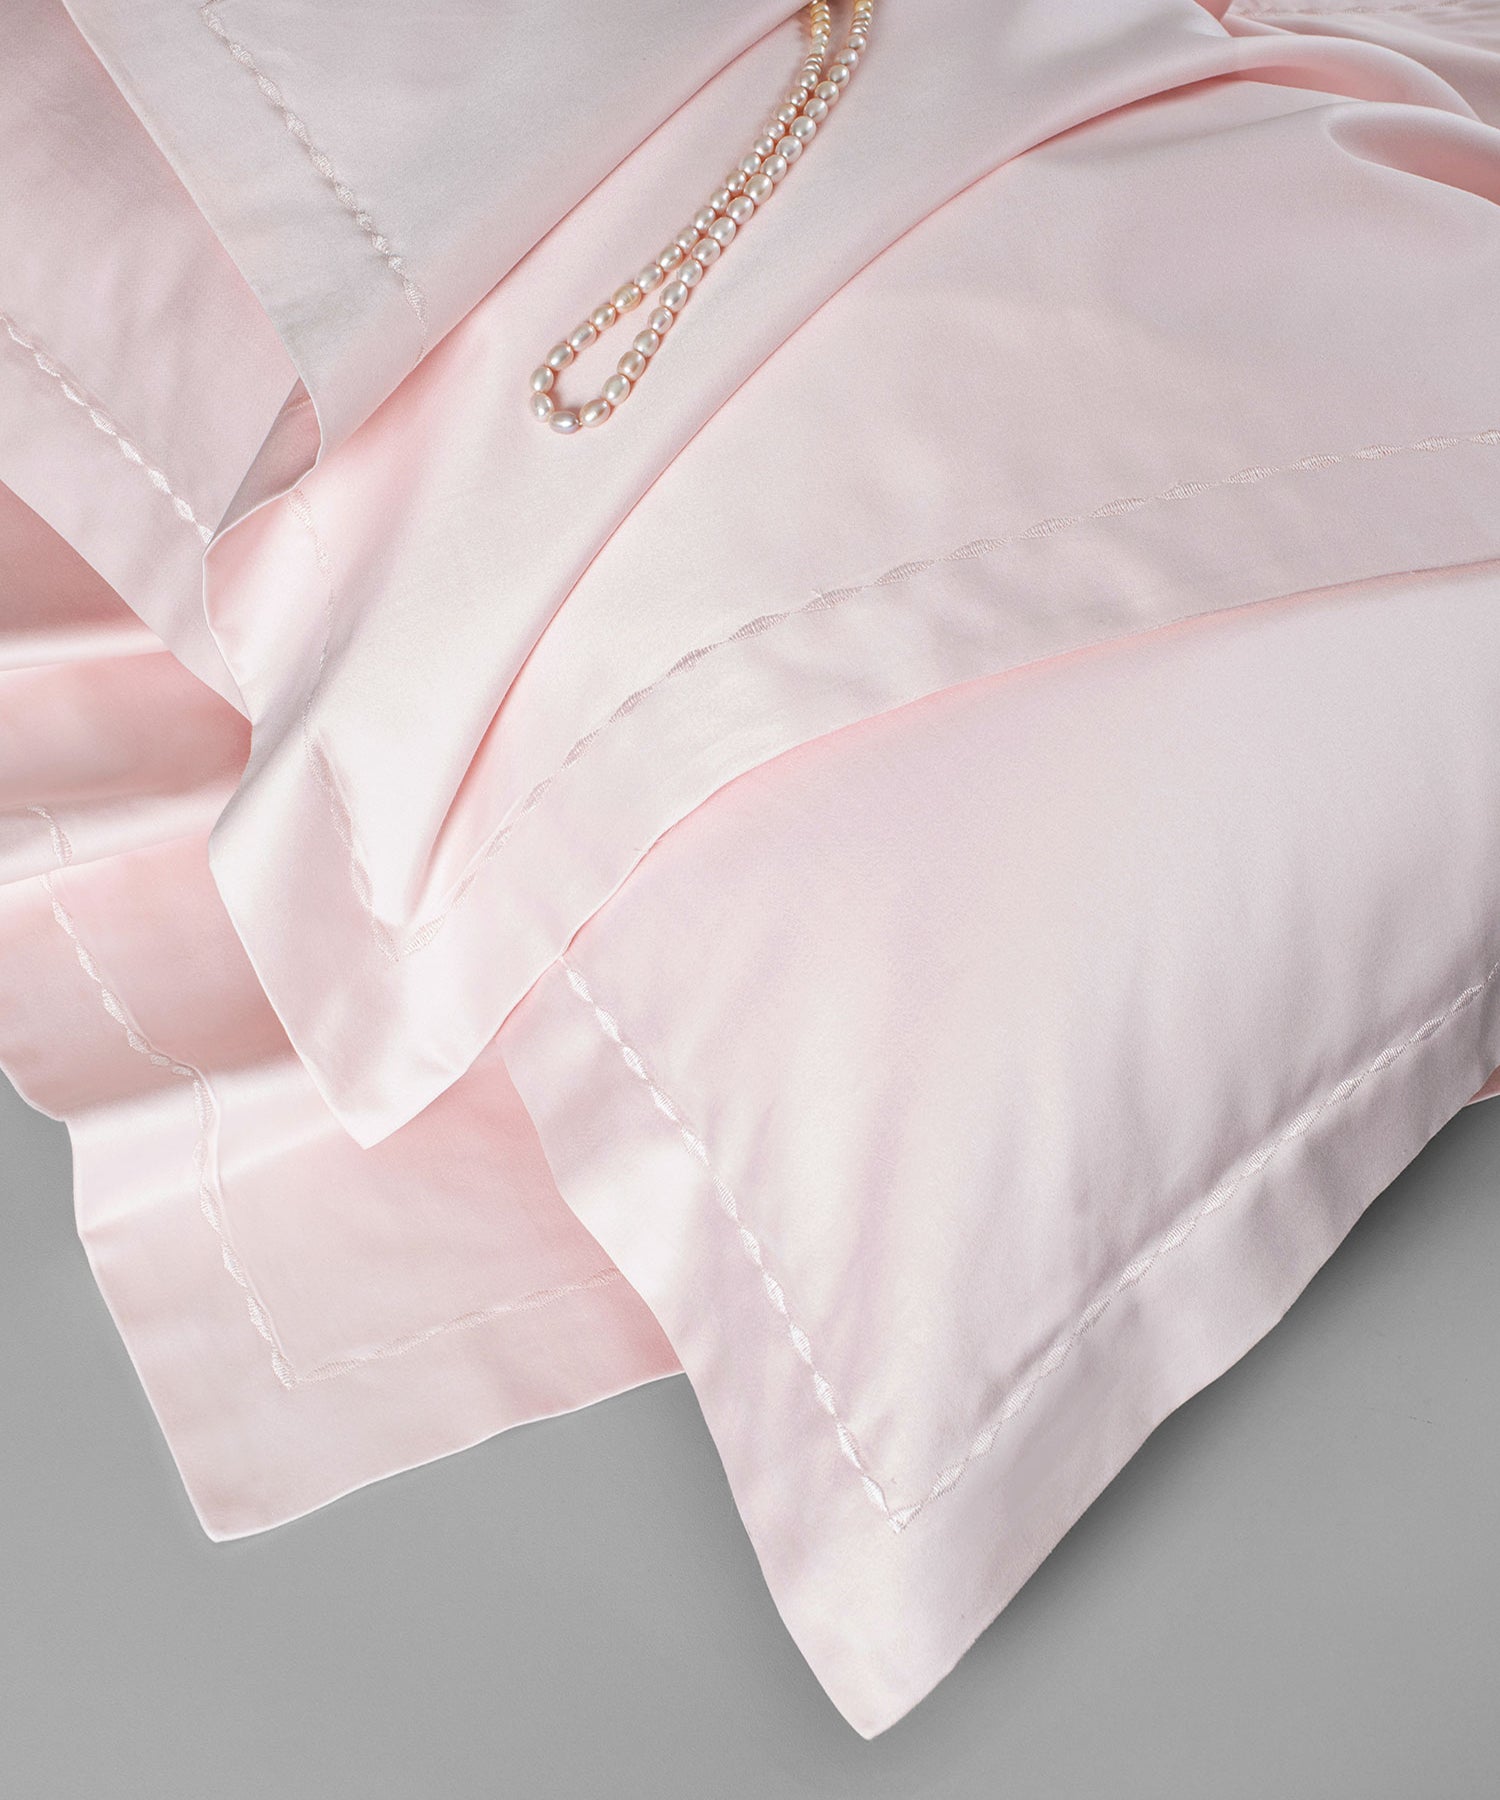 600 TC, Nectarsoft King Bedsheet, 100% Cotton, Light Pink